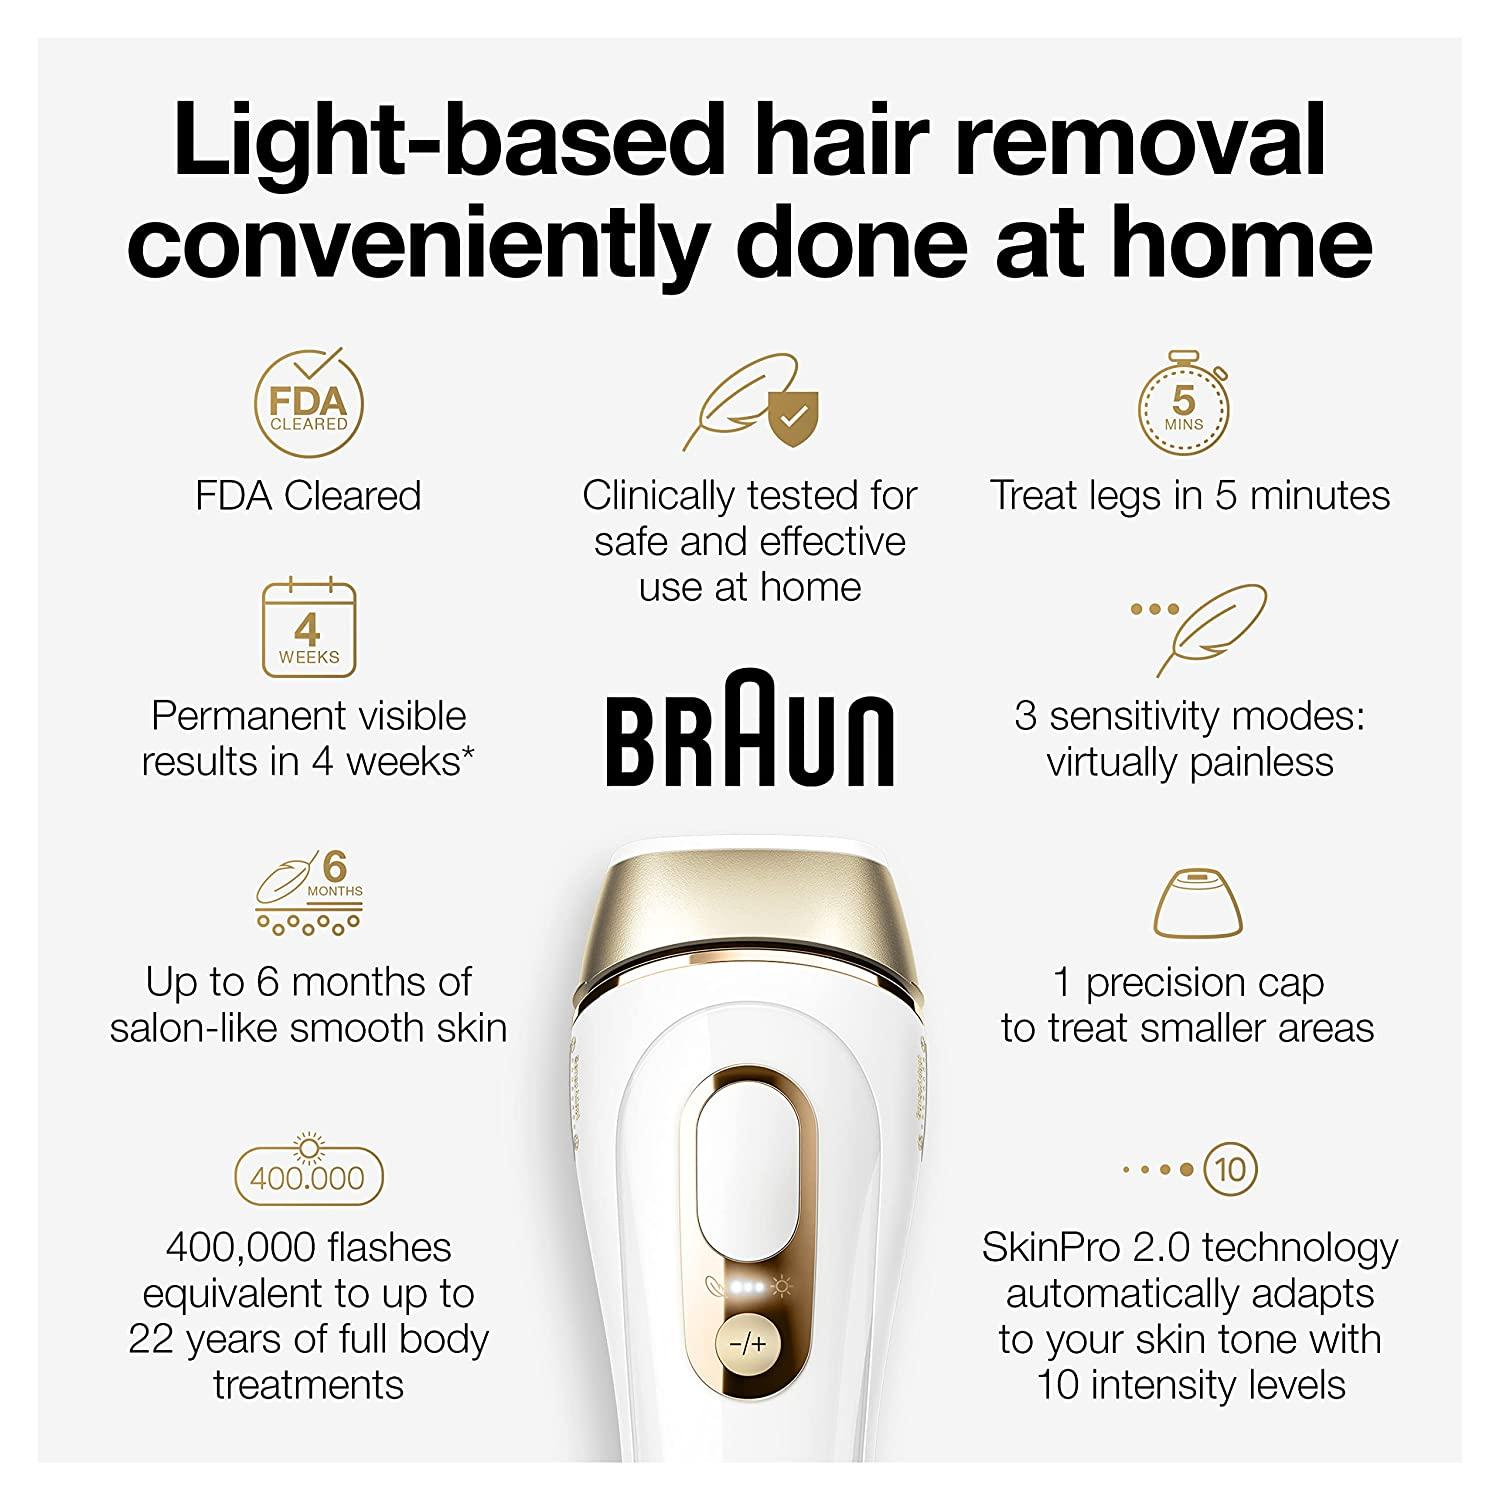  Braun IPL Hair Removal for Women and Men, Silk Expert